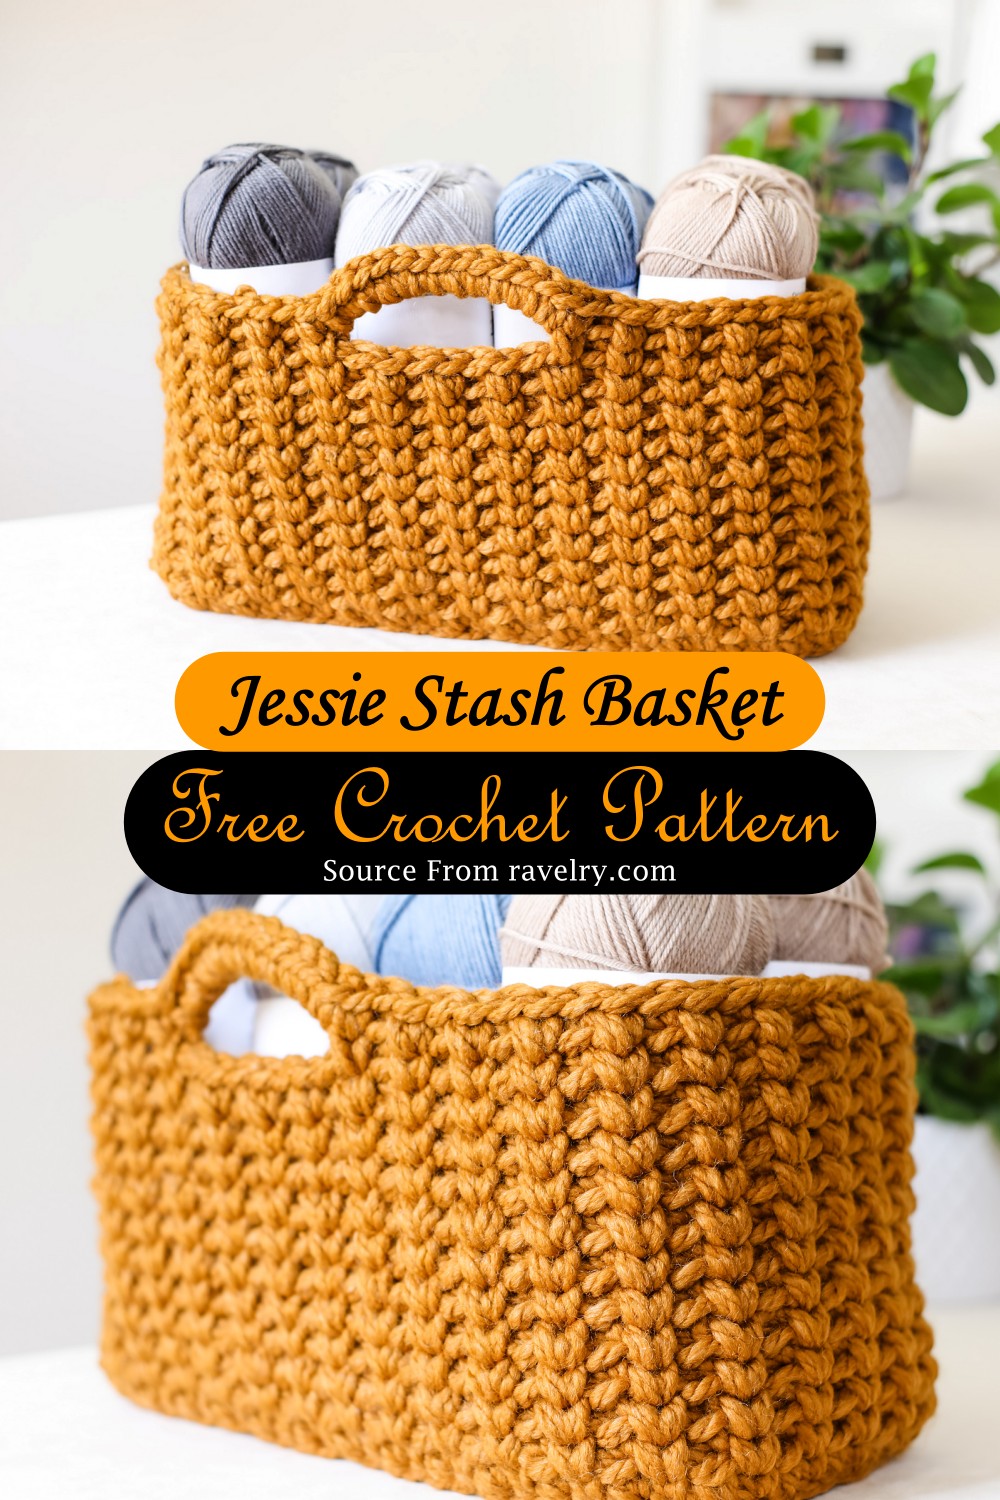 Jessie Stash Basket